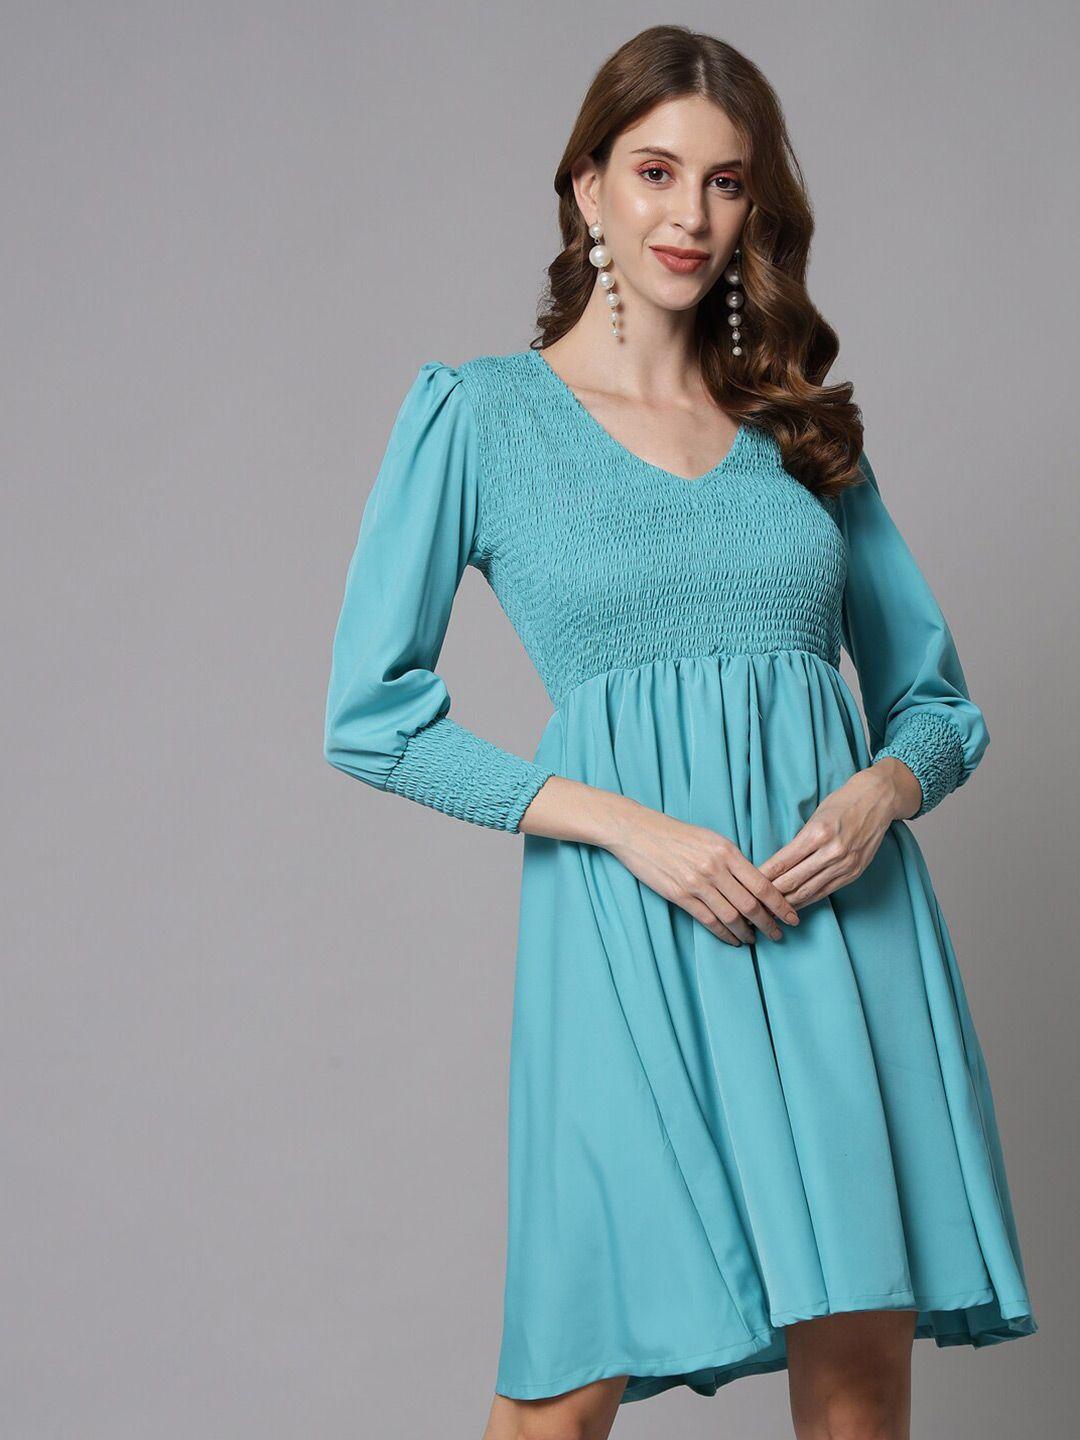 emeros turquoise blue crepe dress